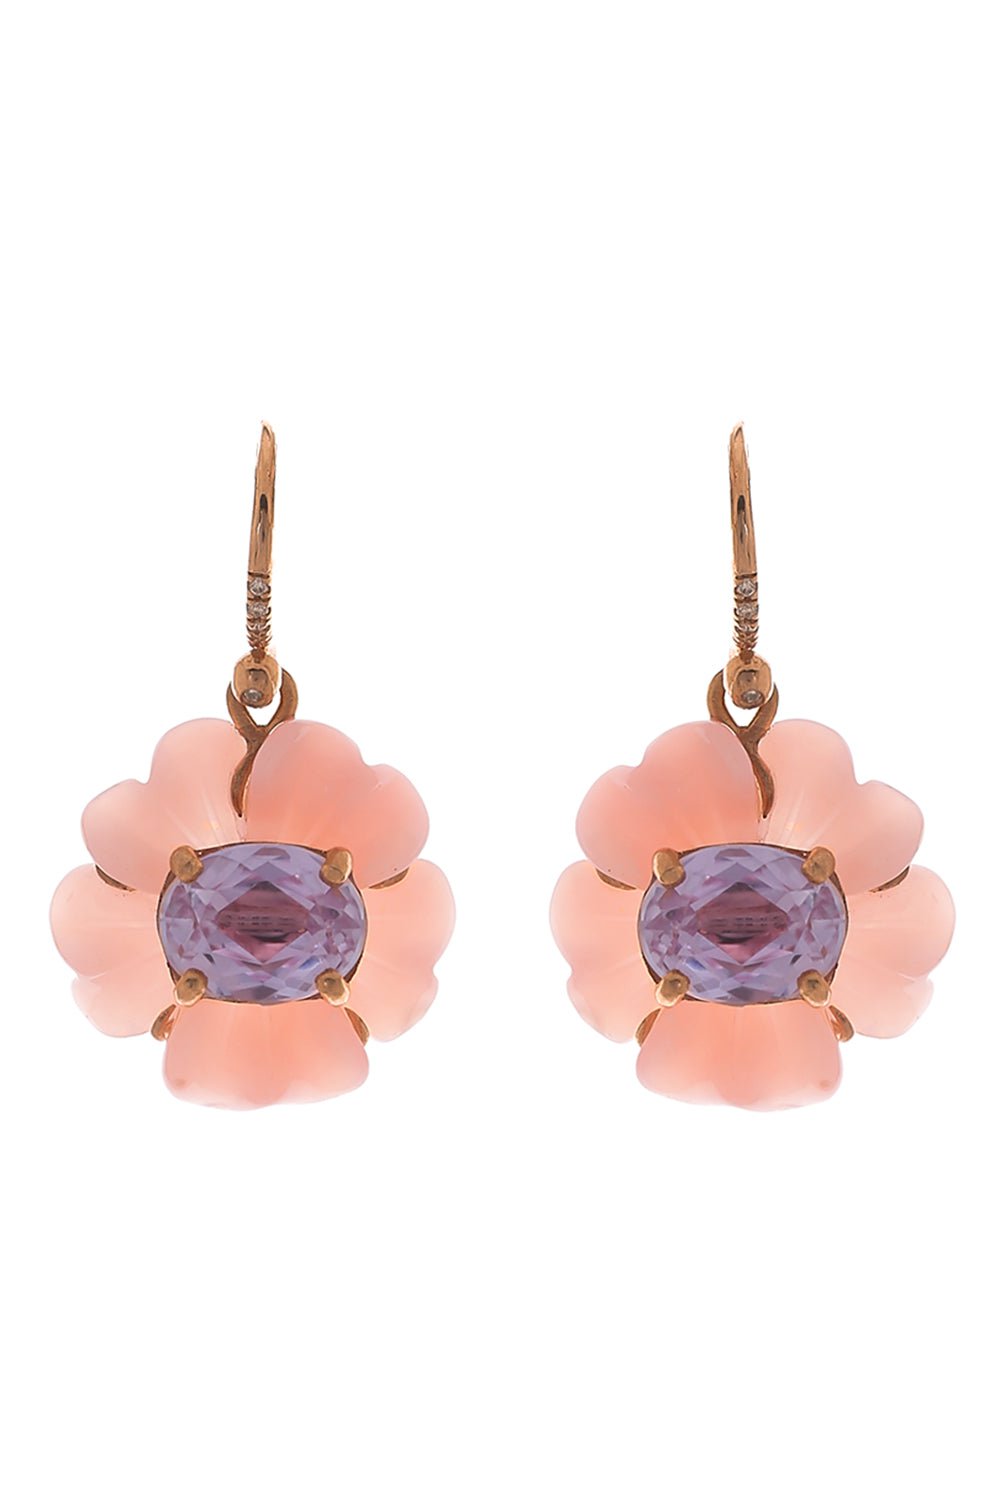 IRENE NEUWIRTH JEWELRY-Opal Tropical Flower Earrings-ROSE GOLD